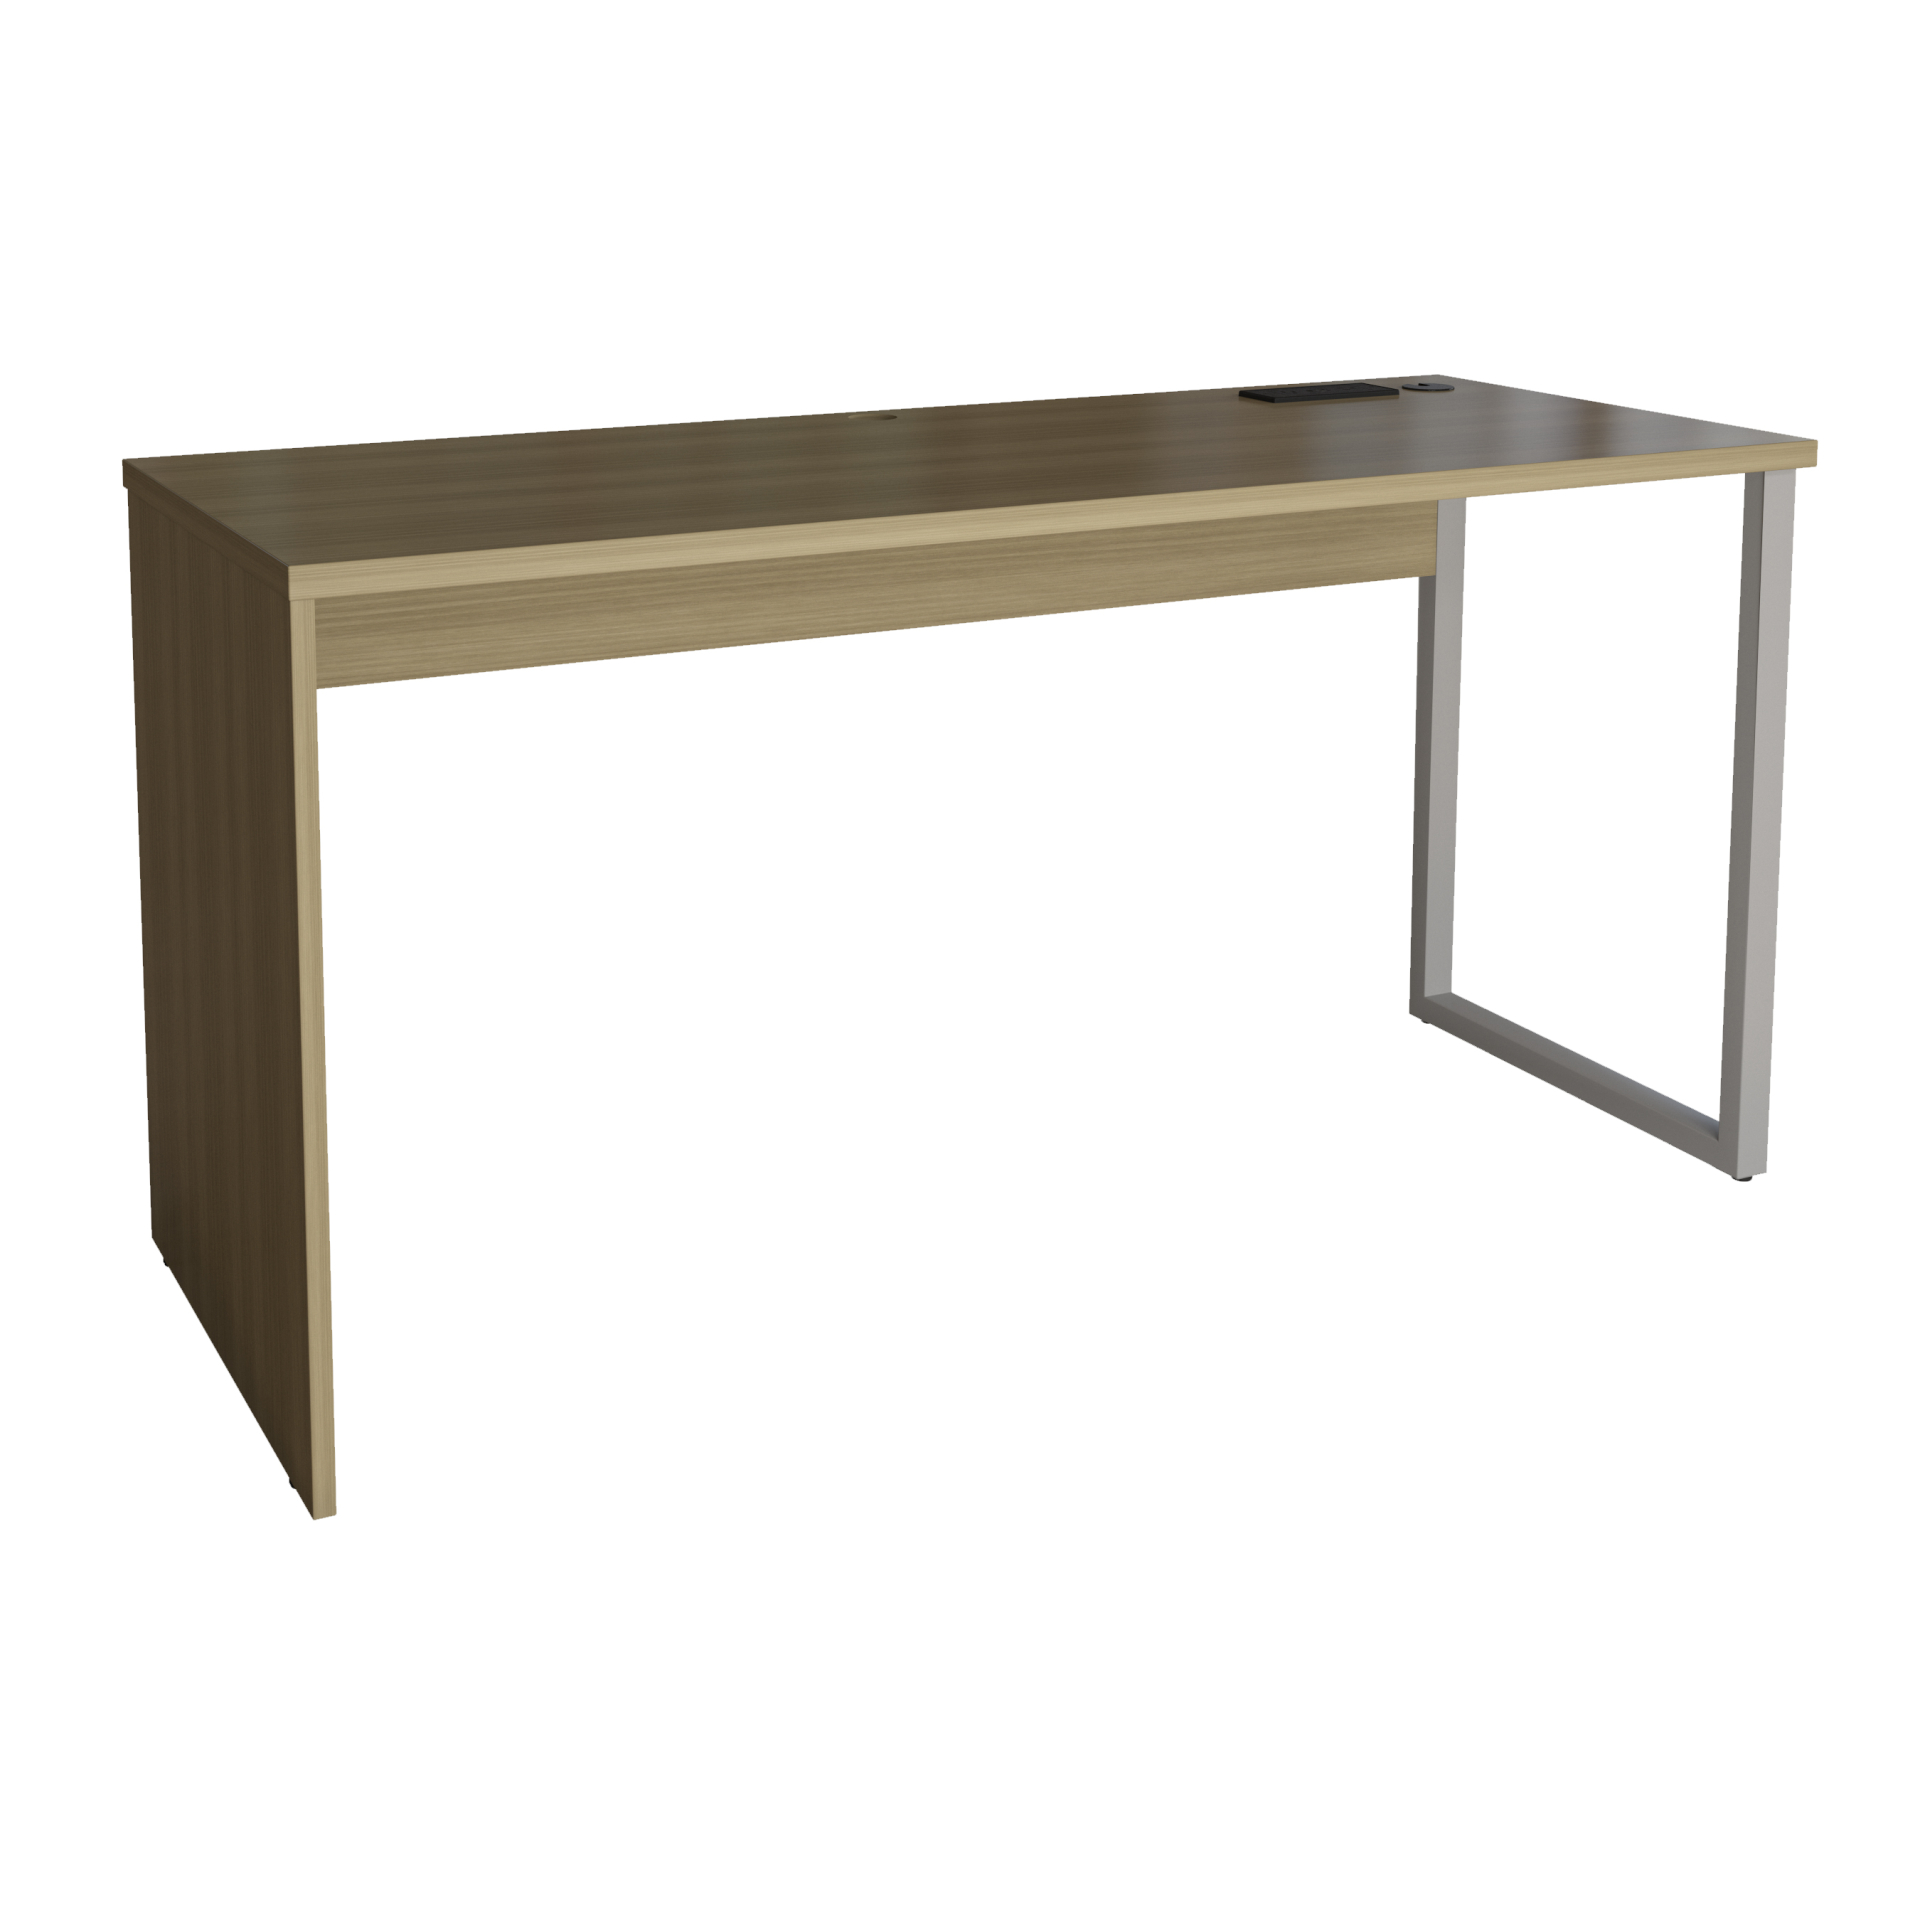 HFRDS-022S Desk With 1 Metal Leg - Foliot Furniture